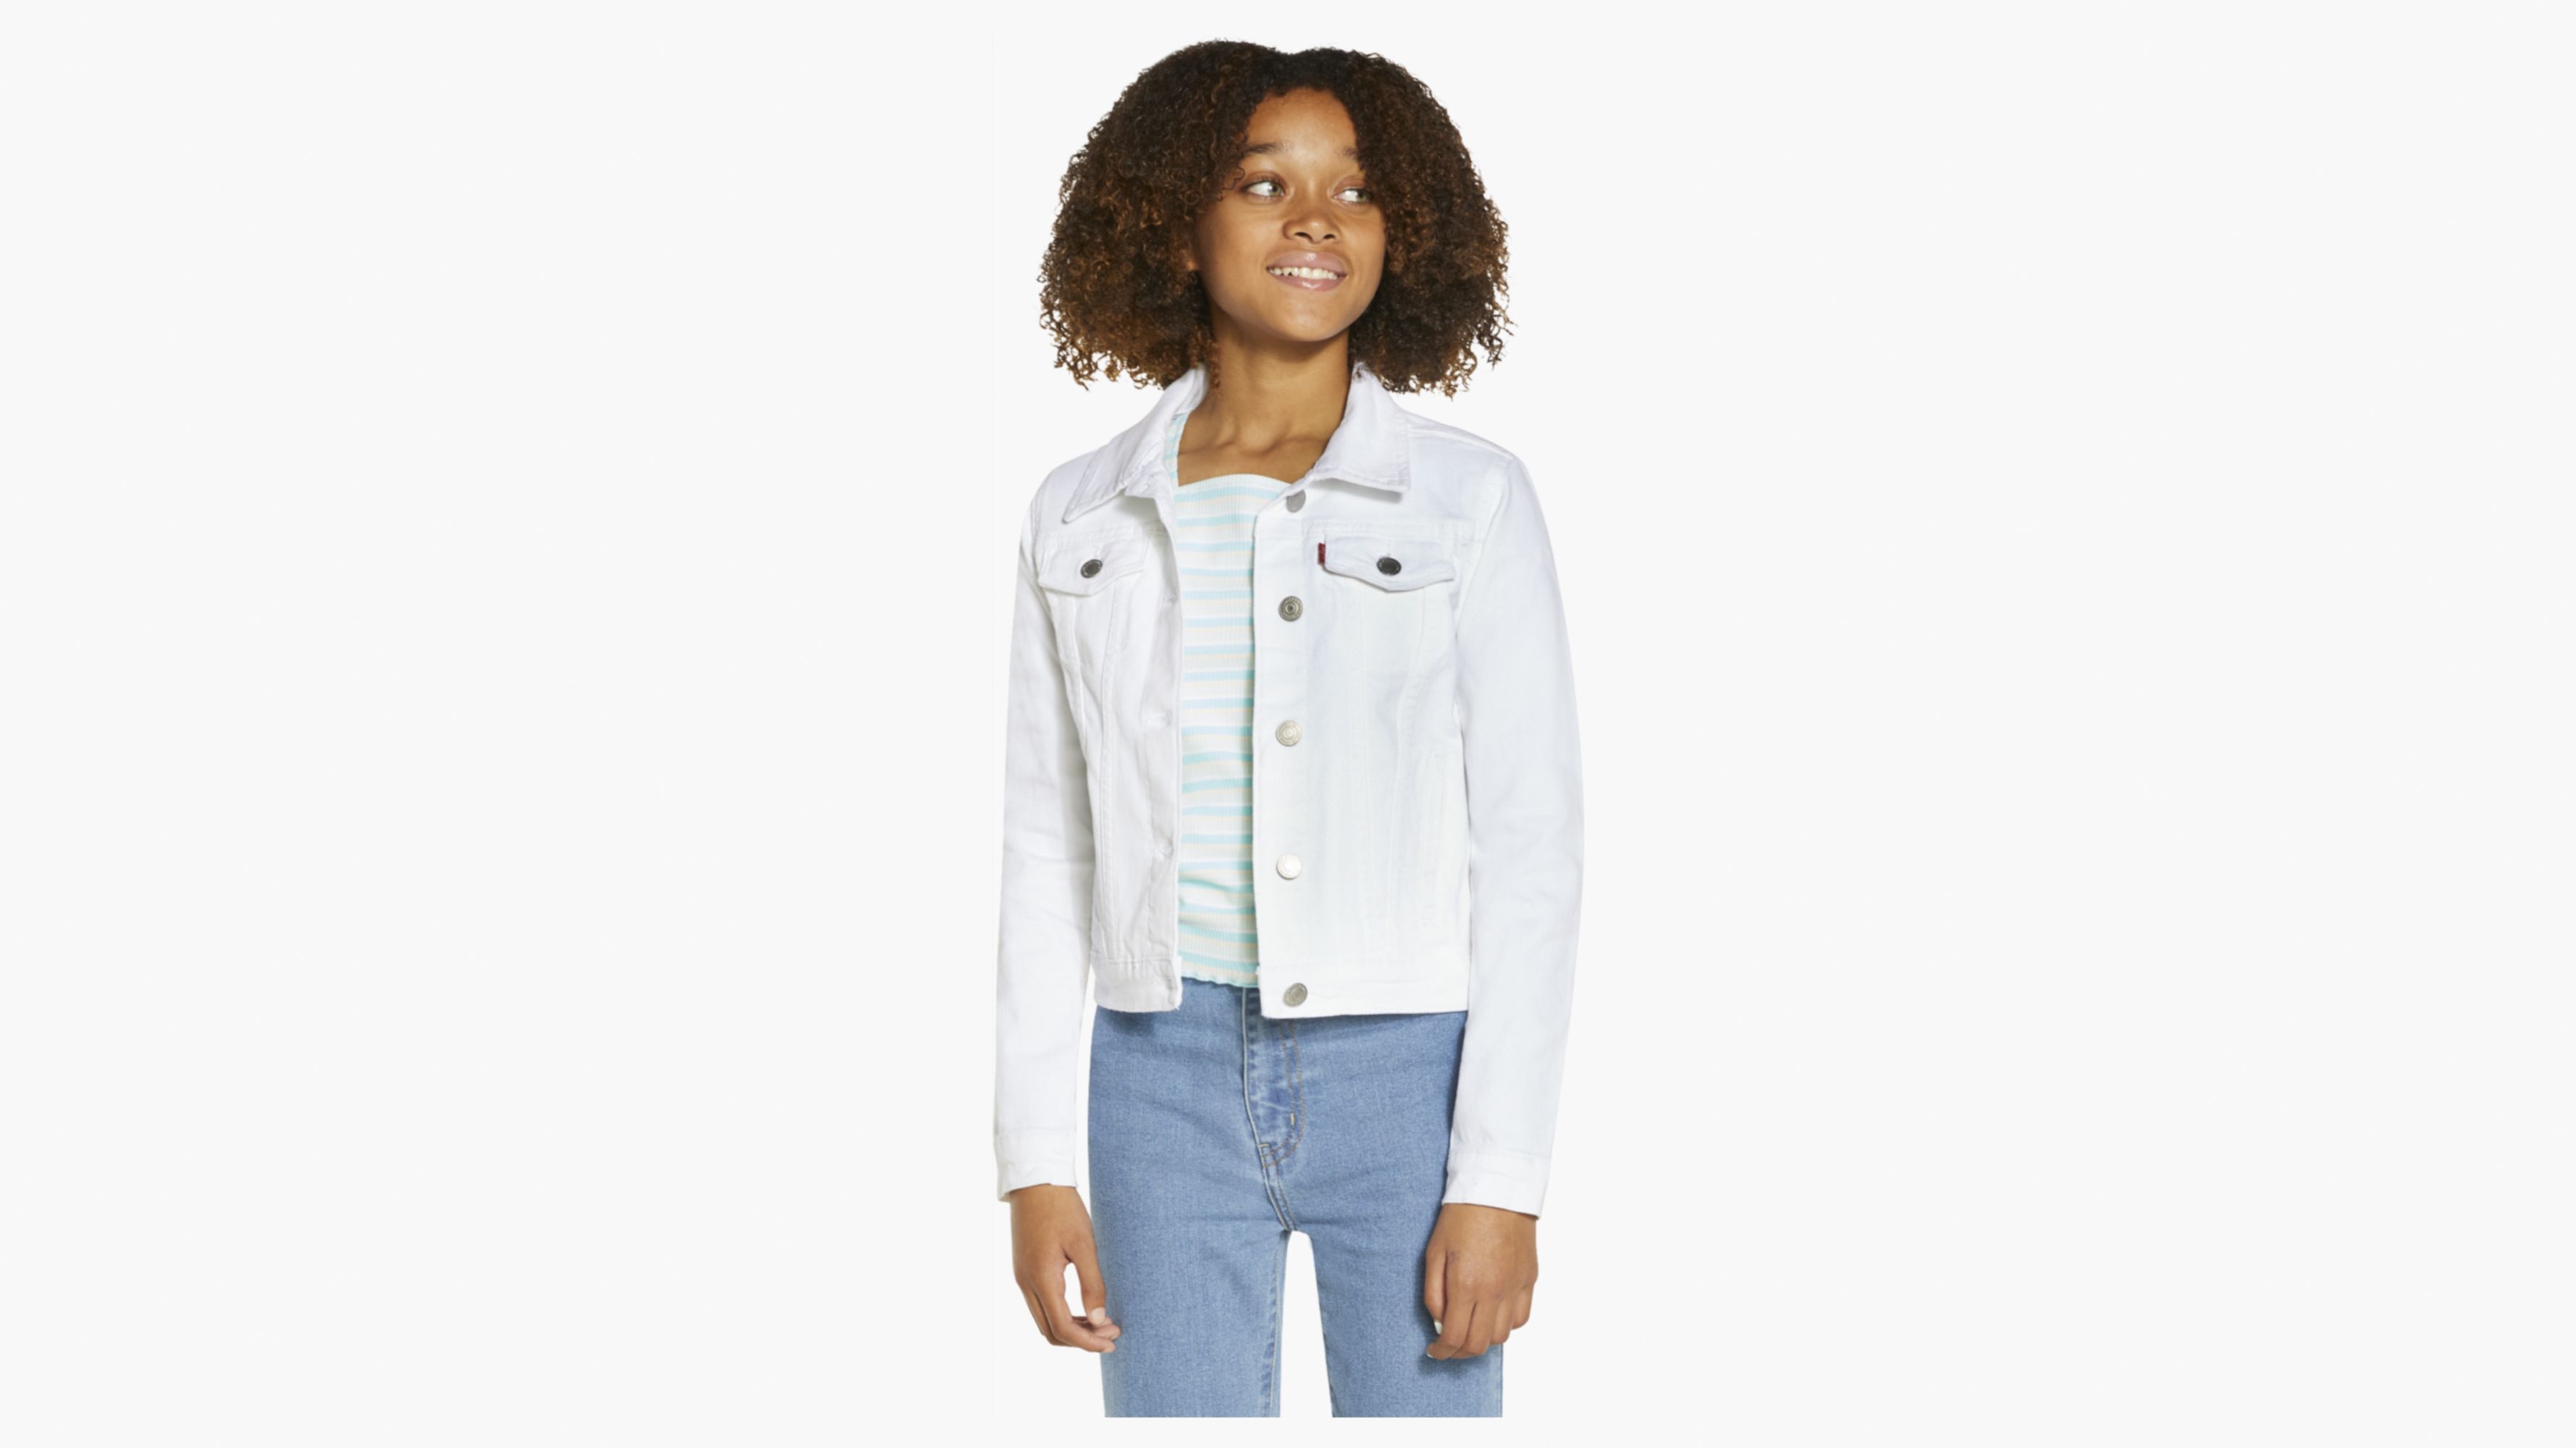 levi's white jeans jacket